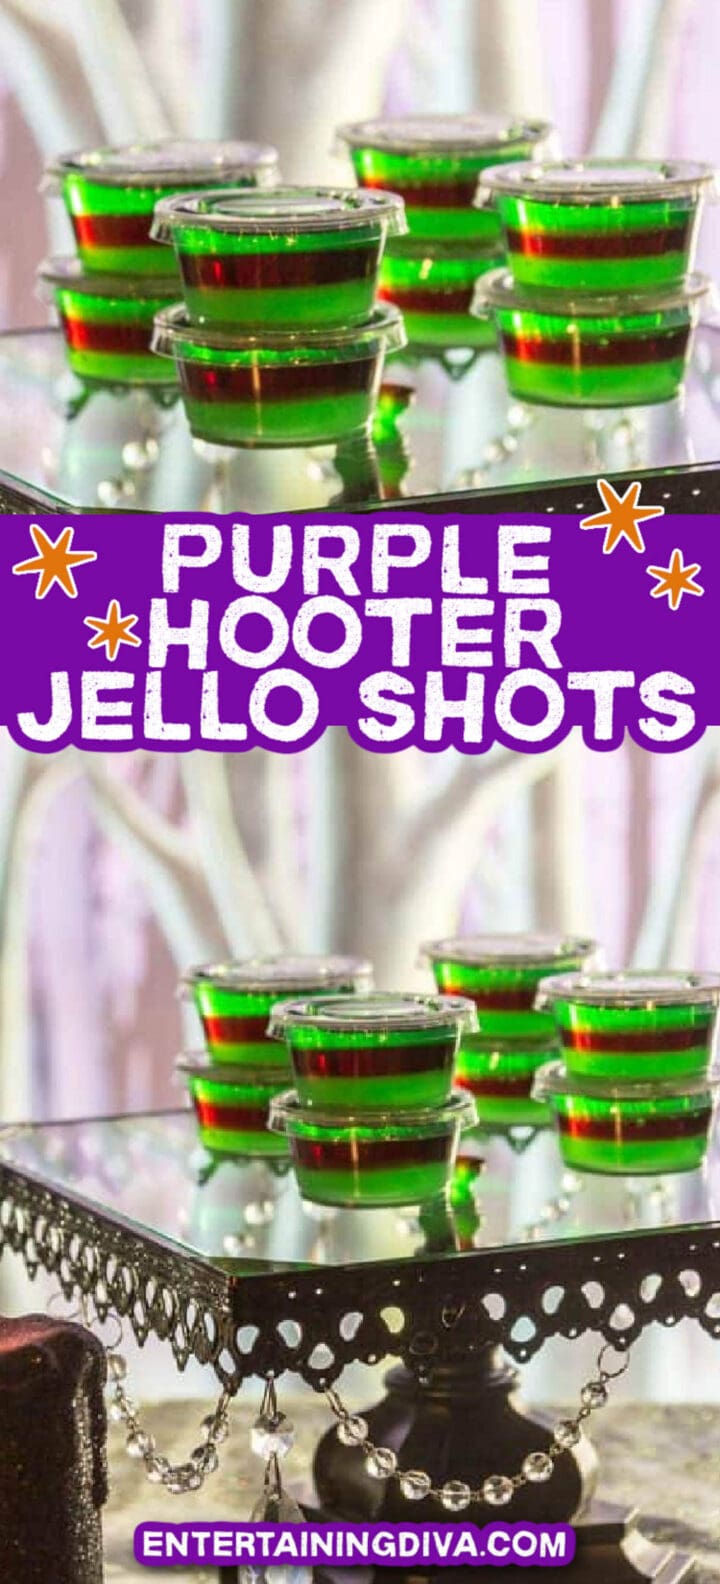 Purple Hooter layered jello shots.